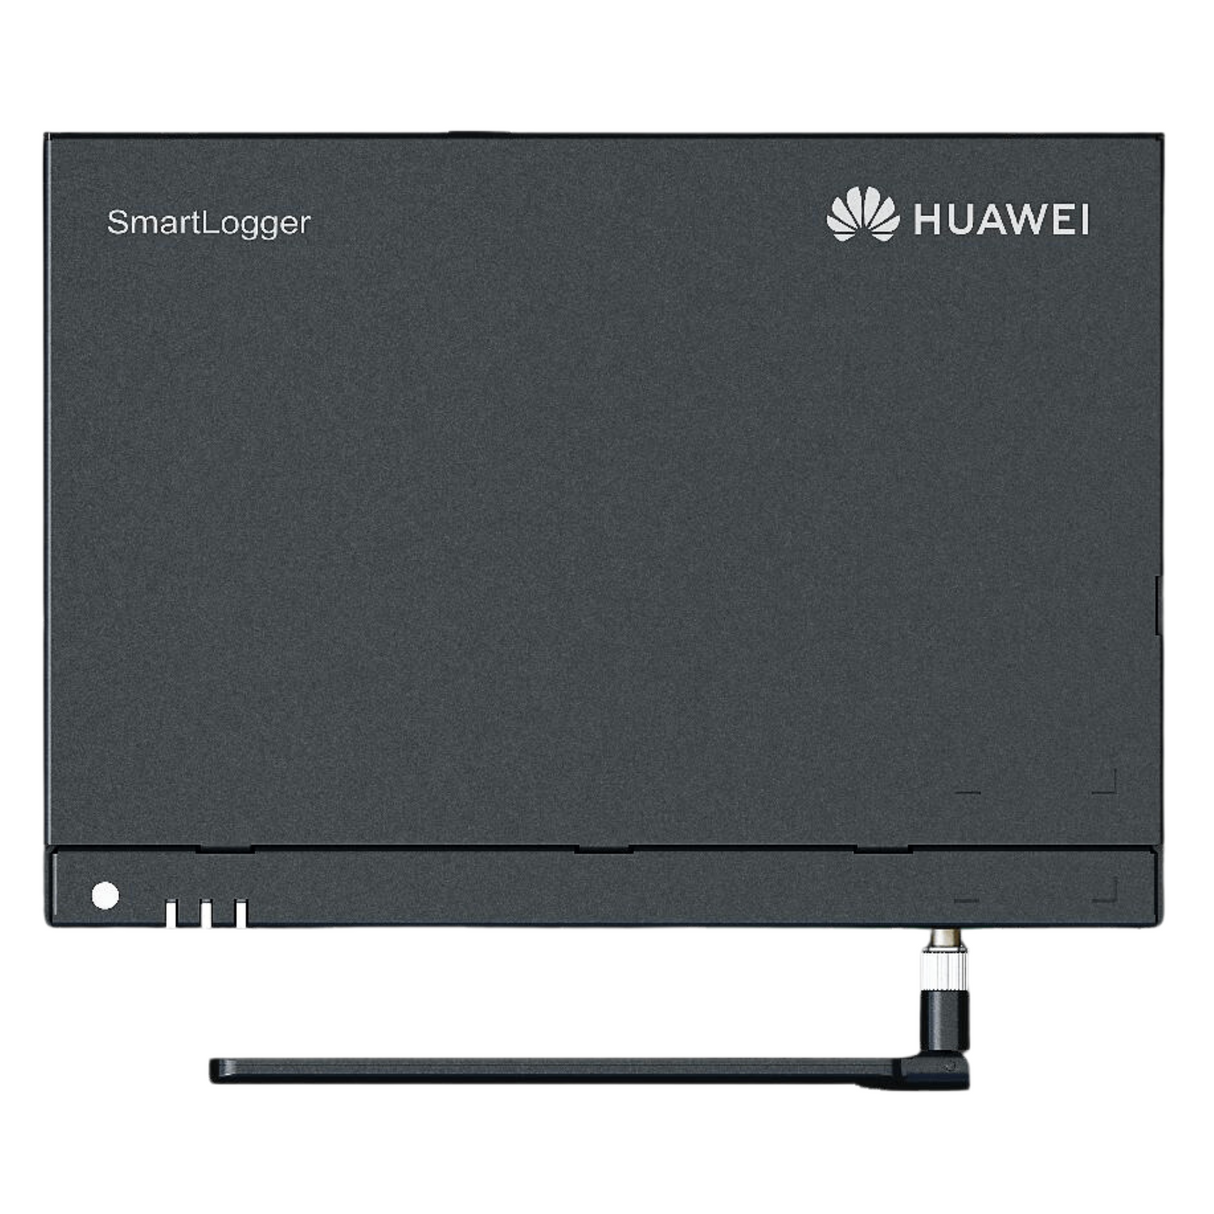 HUAWEI SmartLogger3000A03EU (with MBUS)